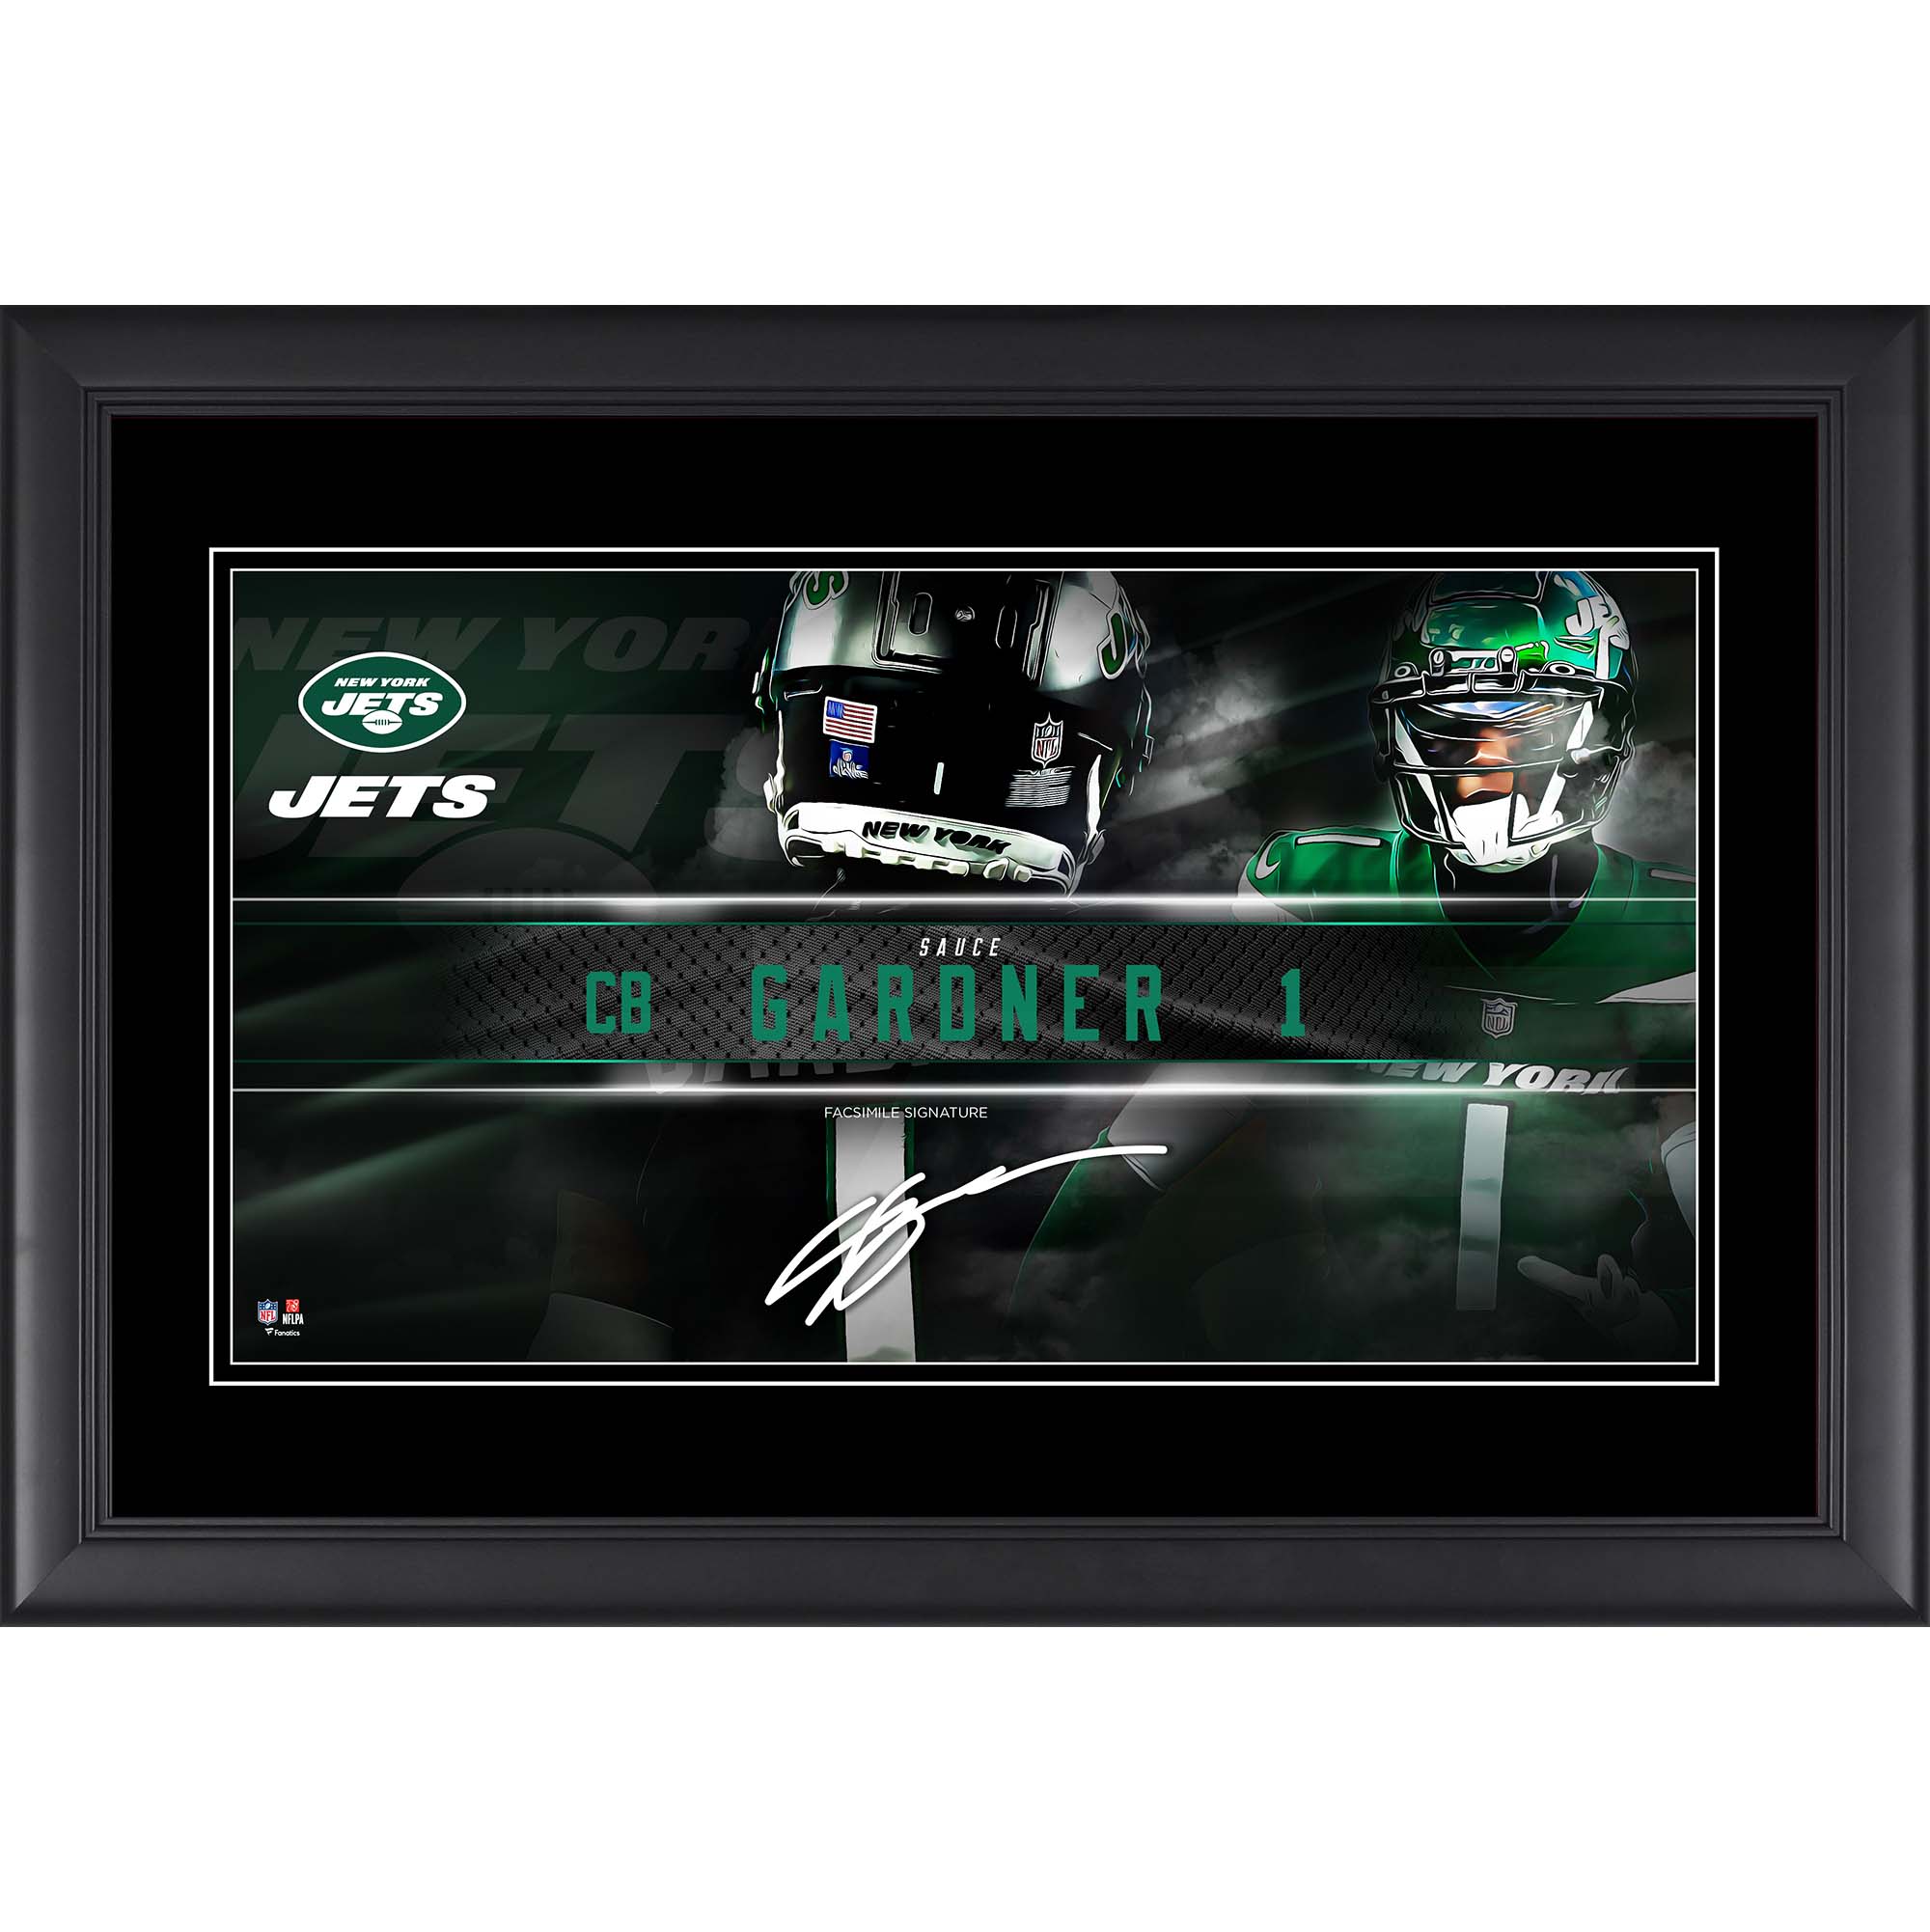 Ahmad Sauce Gardner New York Jets Faksimile-Signatur, gerahmt, 10 x 18 Zoll, Spieler-Namensschild-Collage